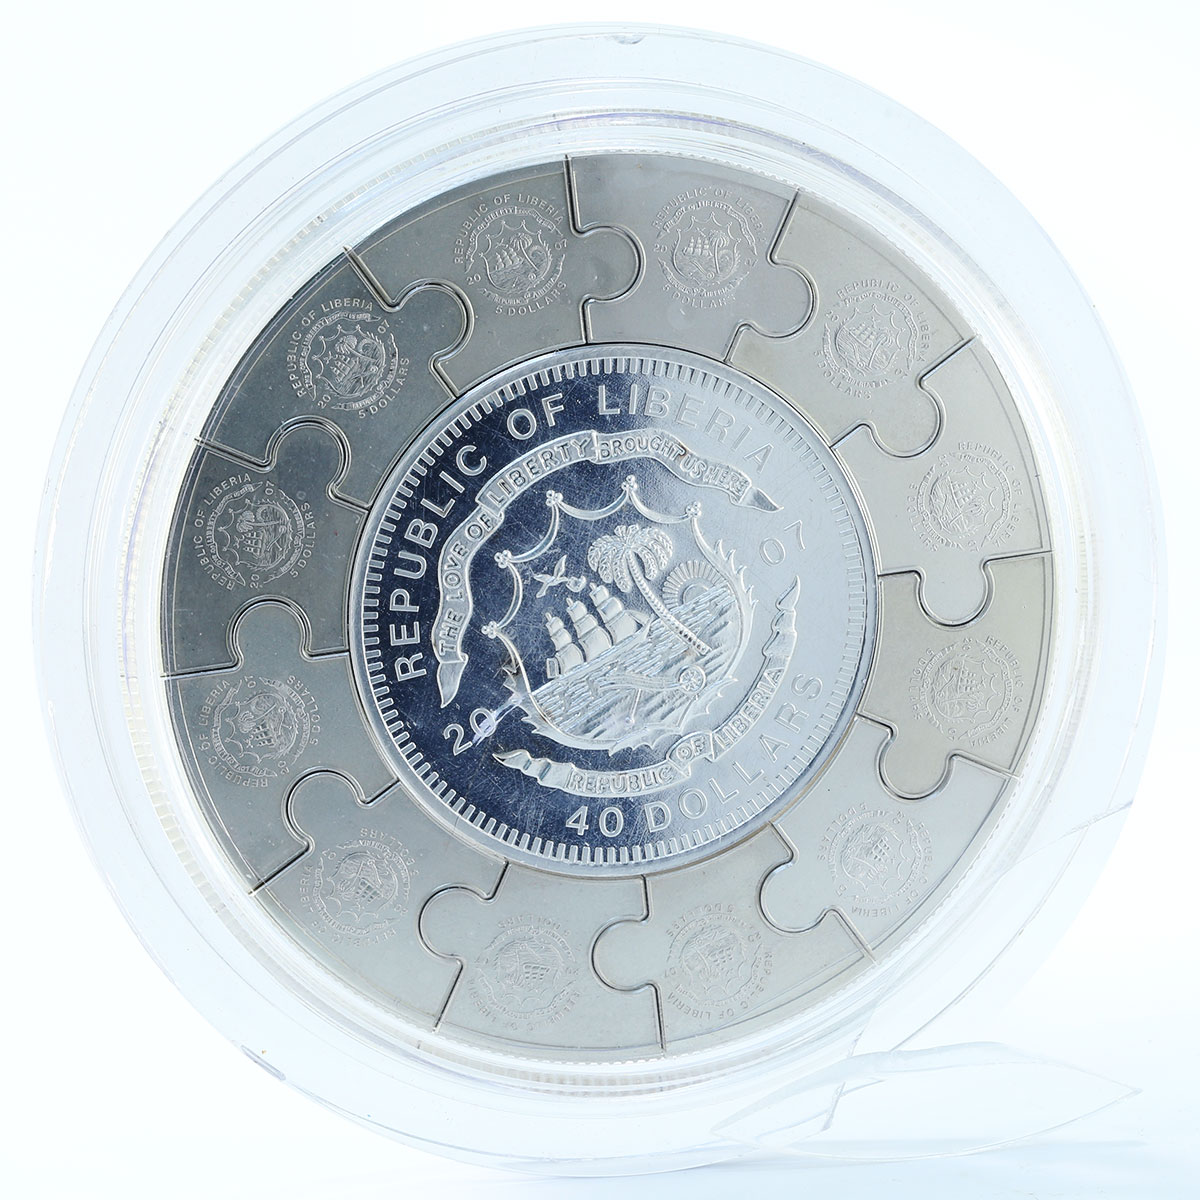 Liberia 100 dollars Apostle Thaler proof silver coin 2007